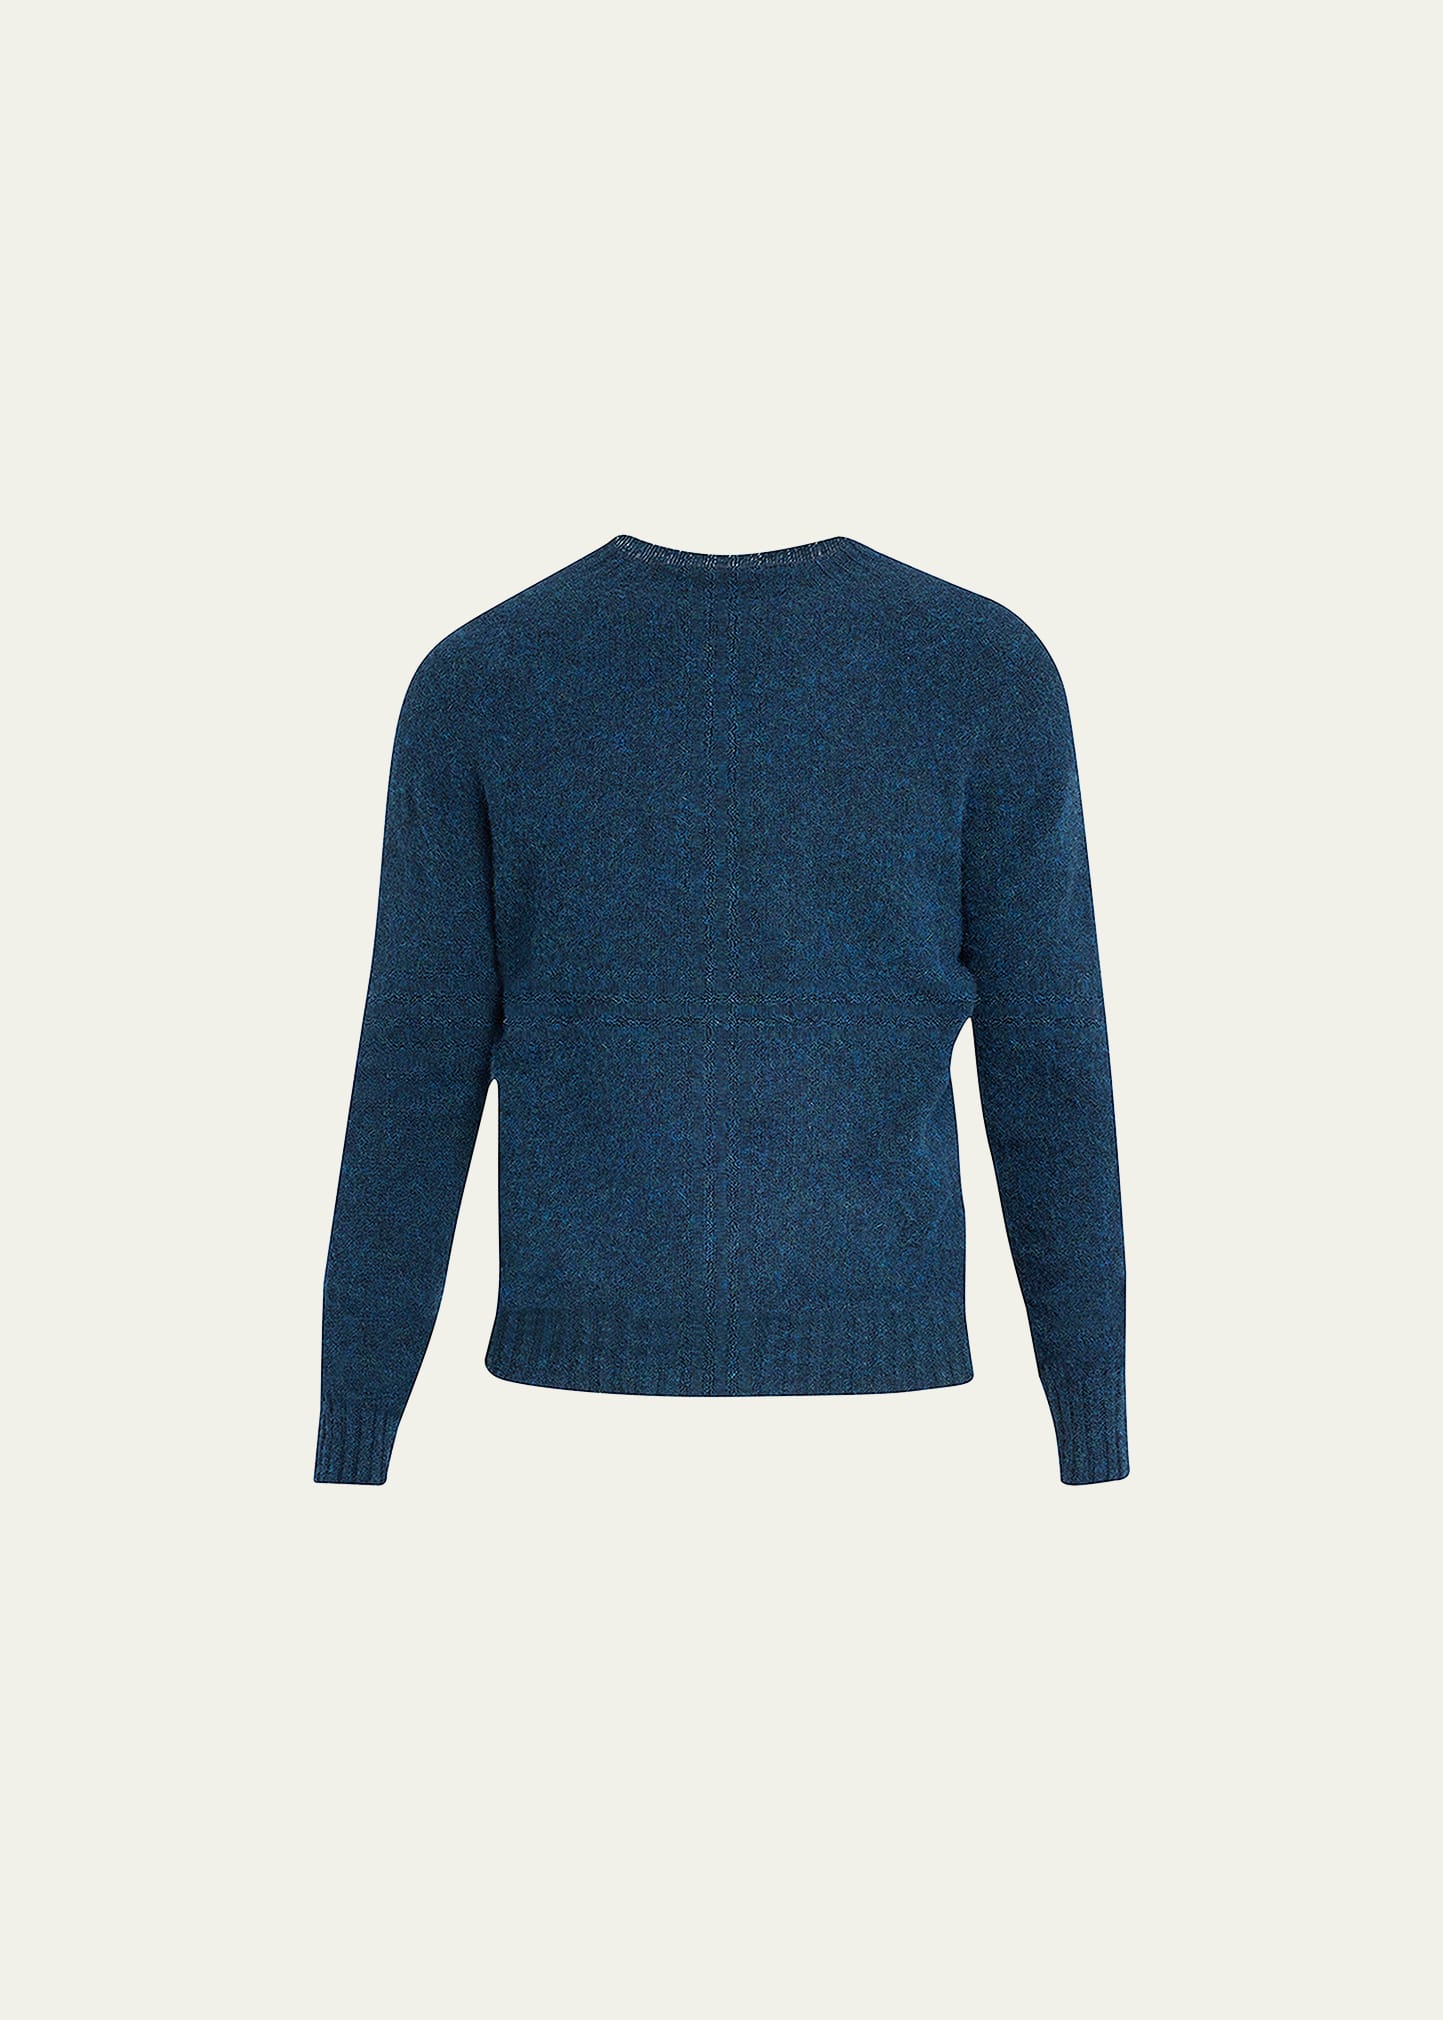 HOWLIN' Men's Shetland Wool Crewneck Sweater